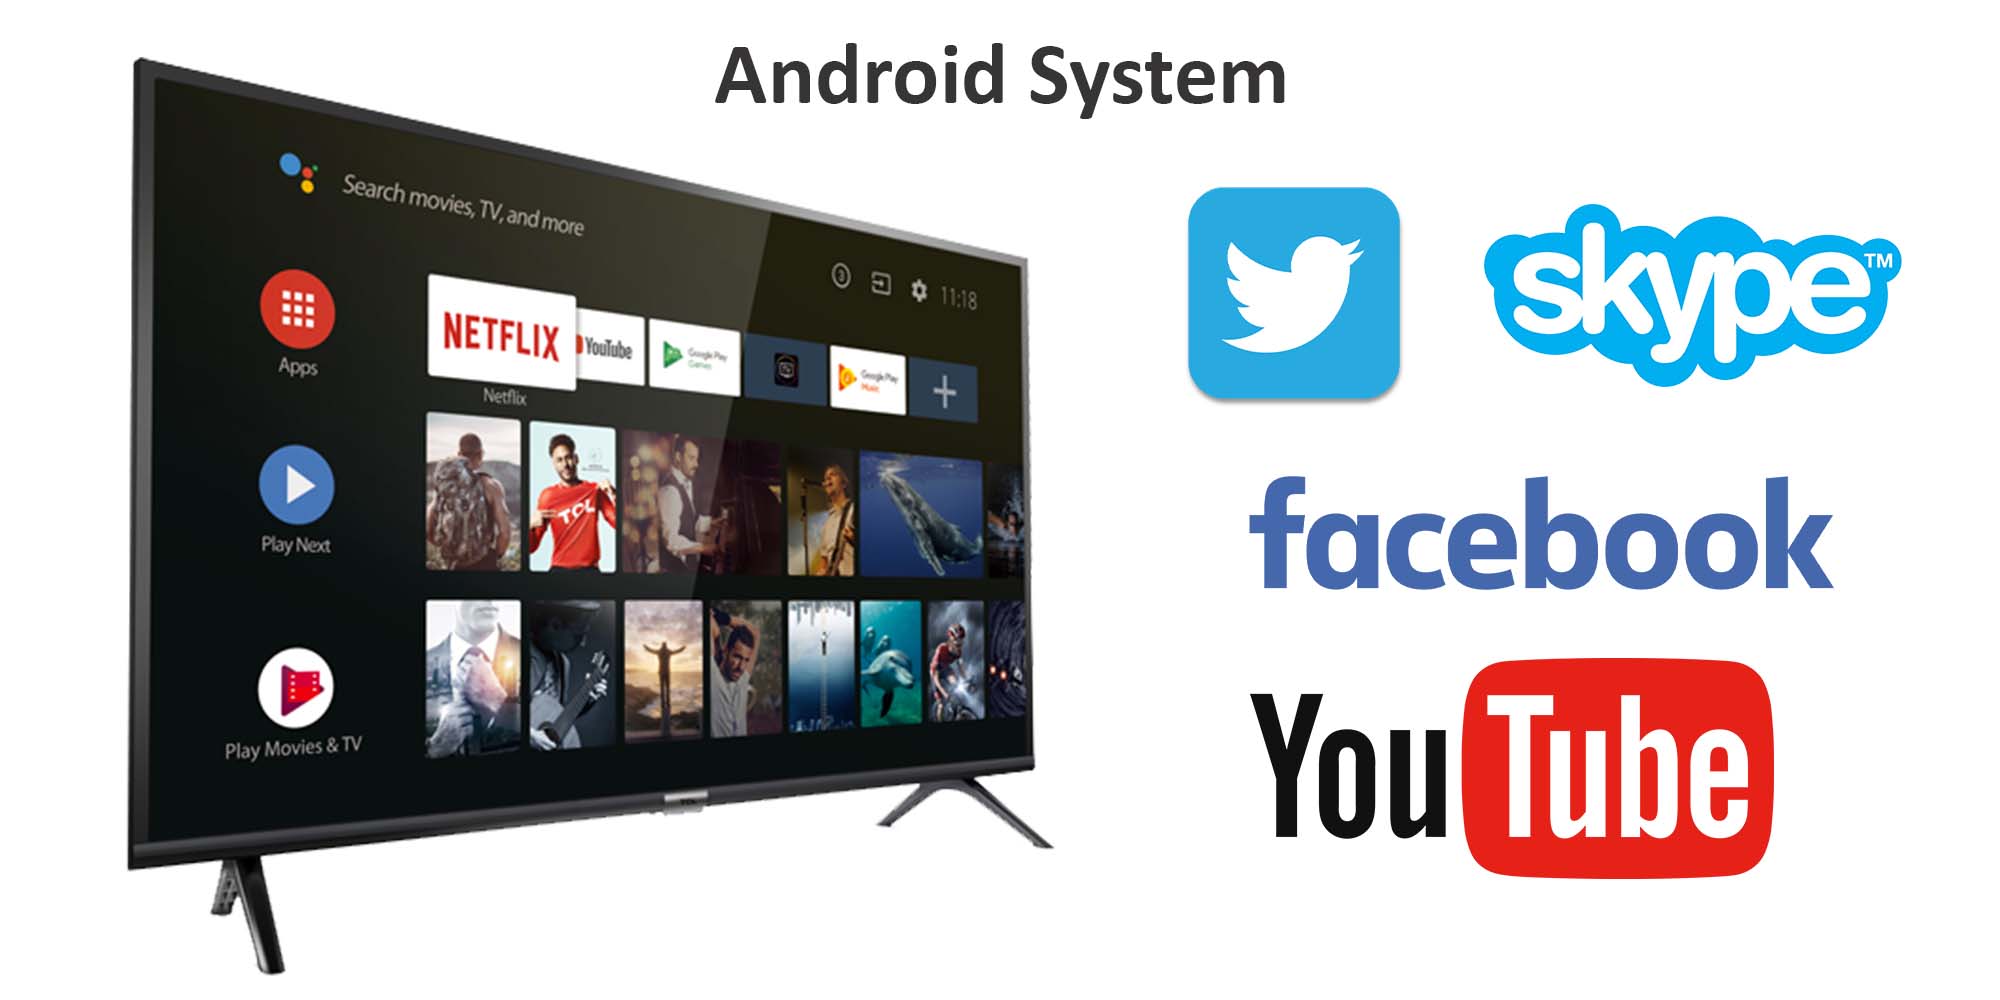 Nikai UHD50SLED2 | 4K UHD Android Smart LED TV